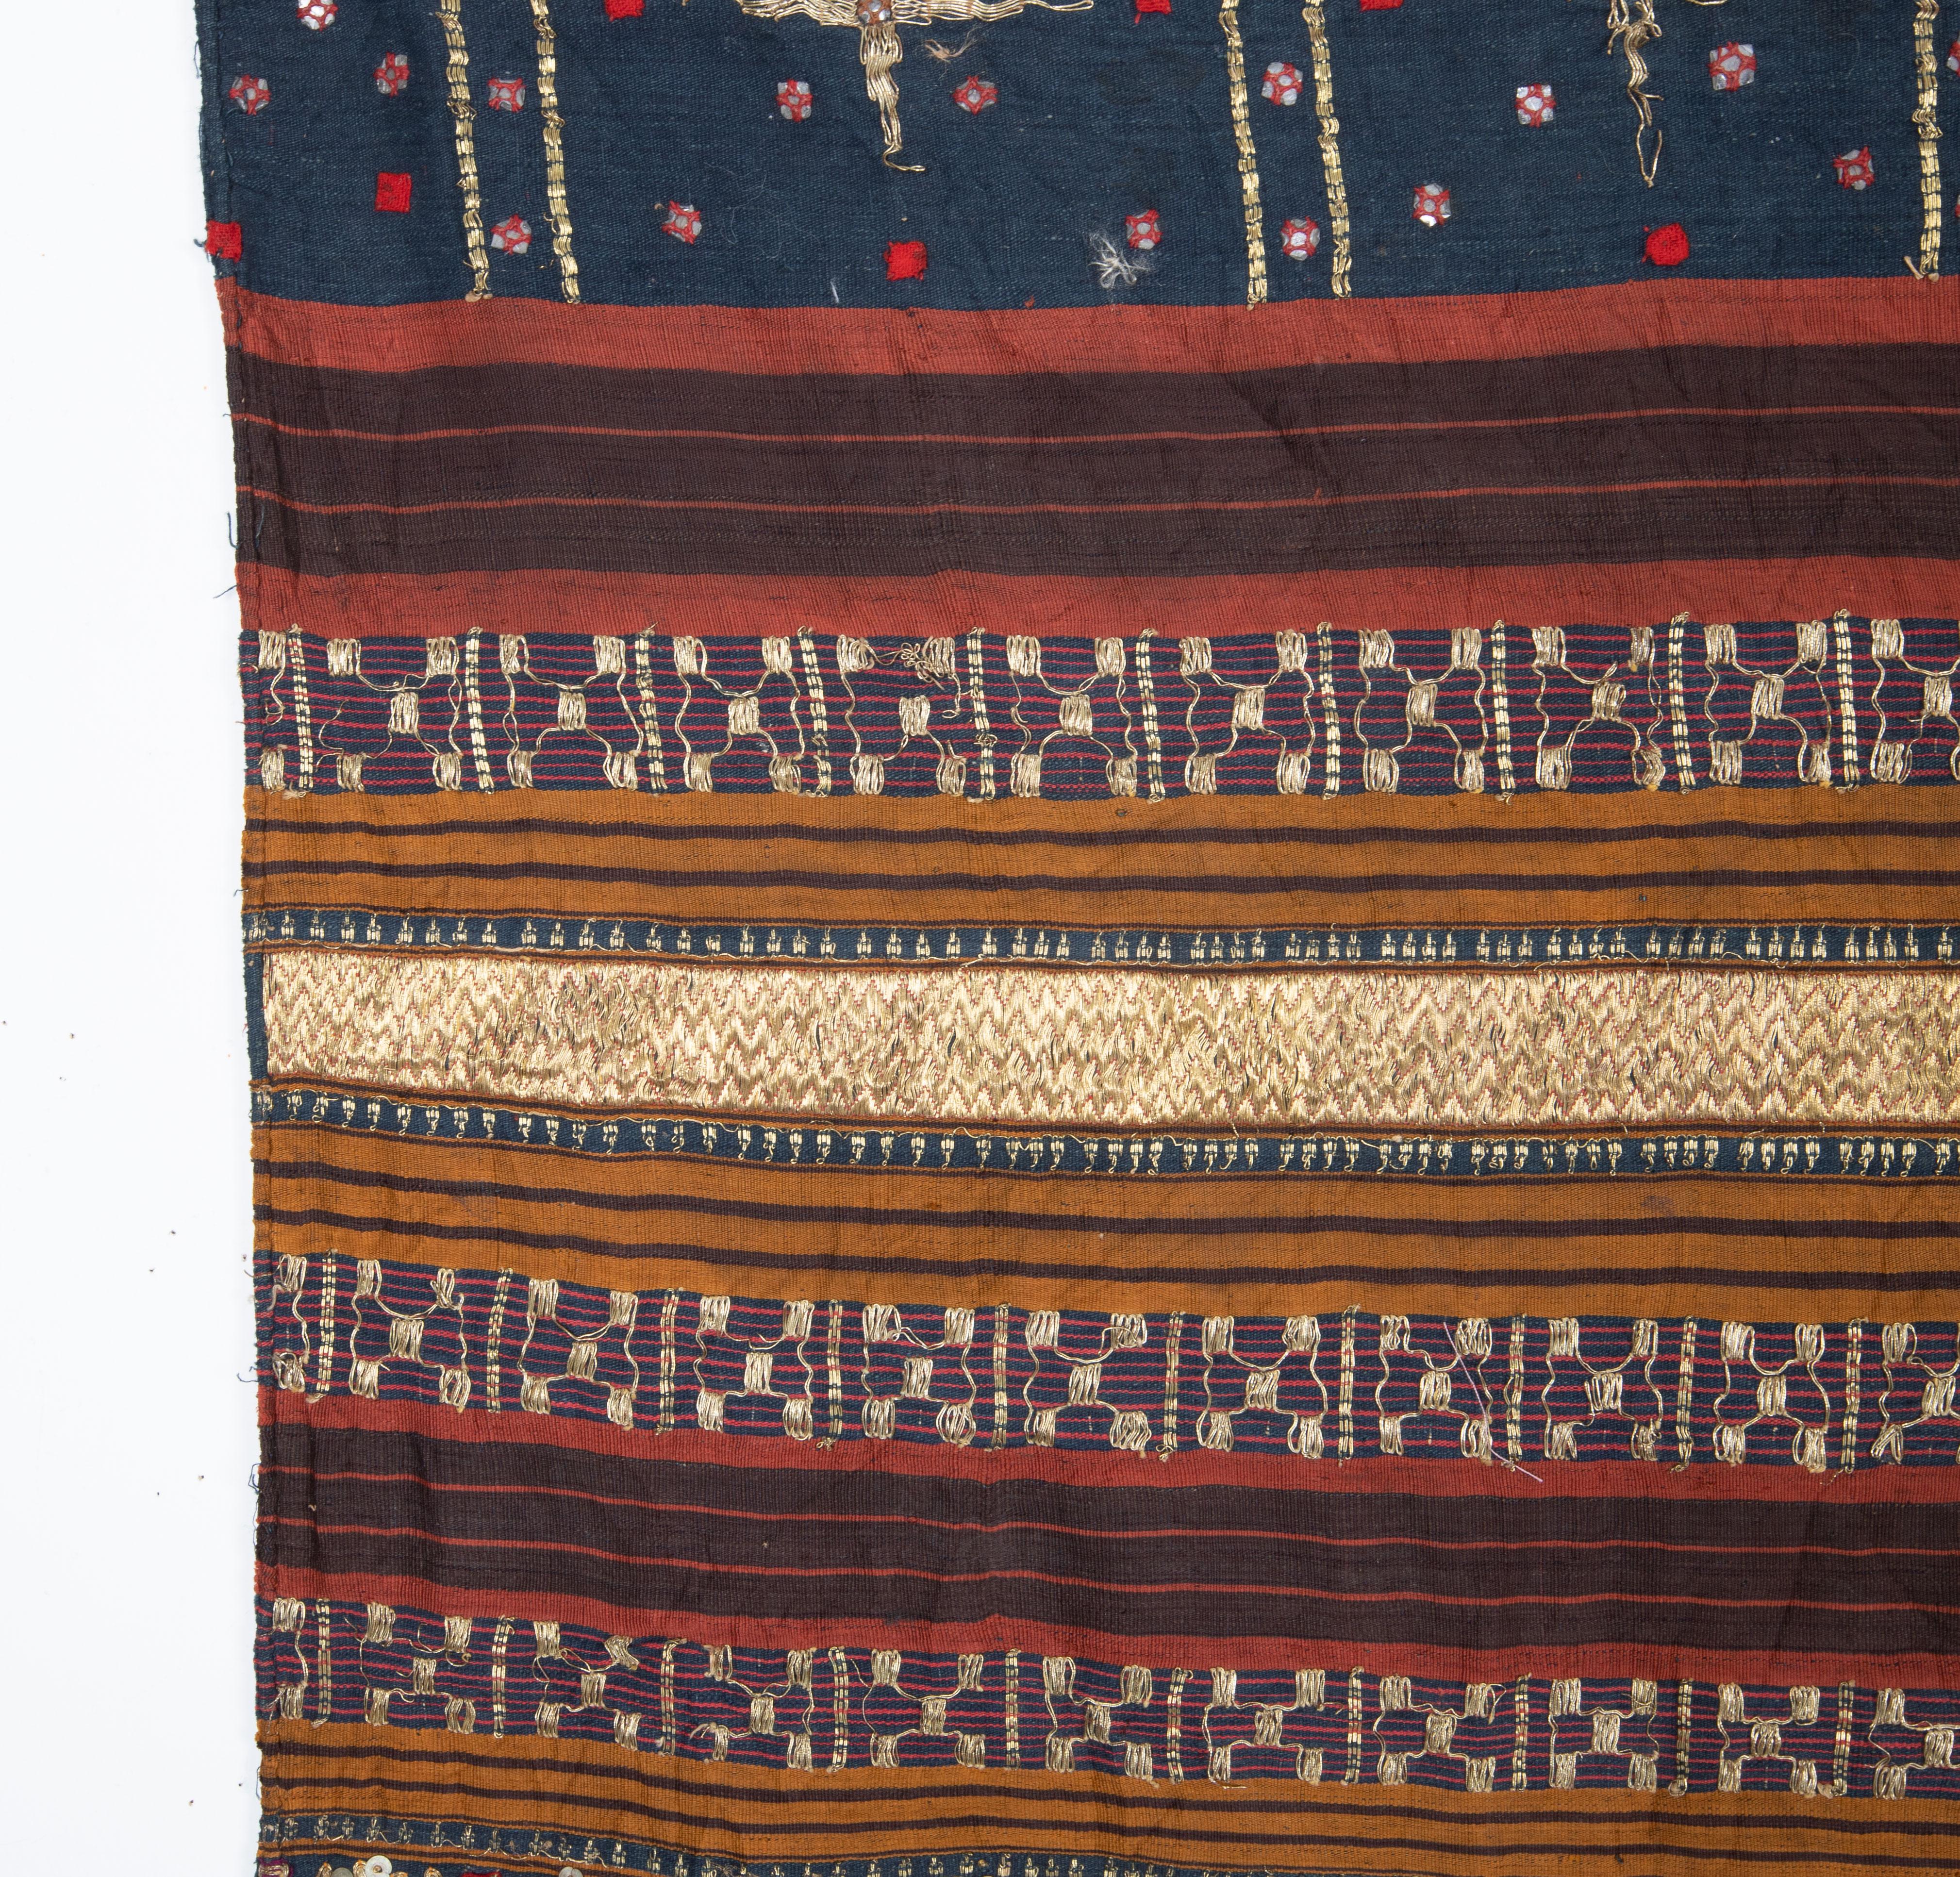 Embroidered Antique Tapis Saron, Sumatra, Indonesia, Early 20th C